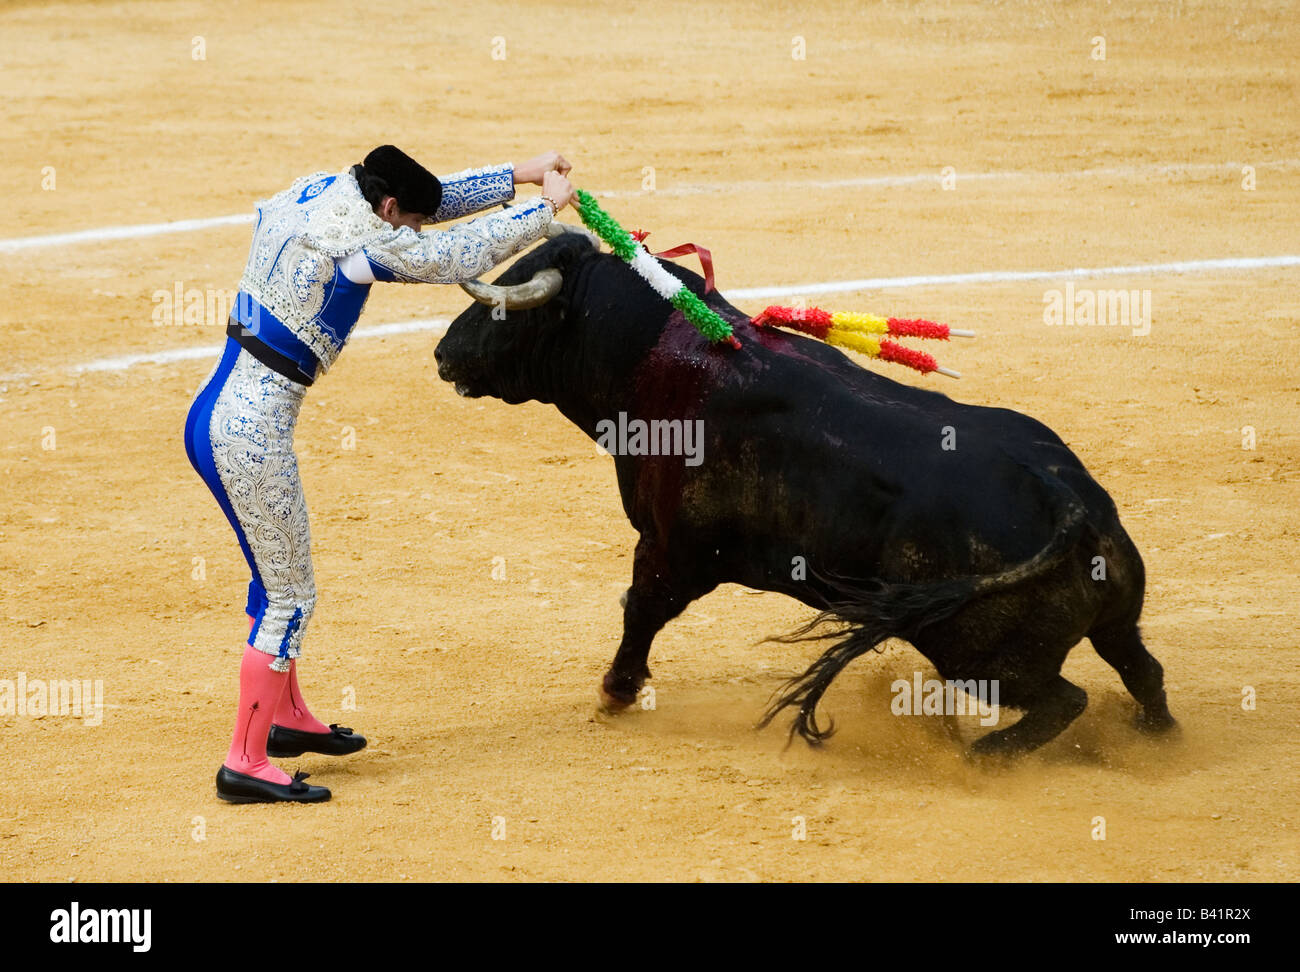 Banderillero stabs toro durante la corrida de toros en España Foto de stock